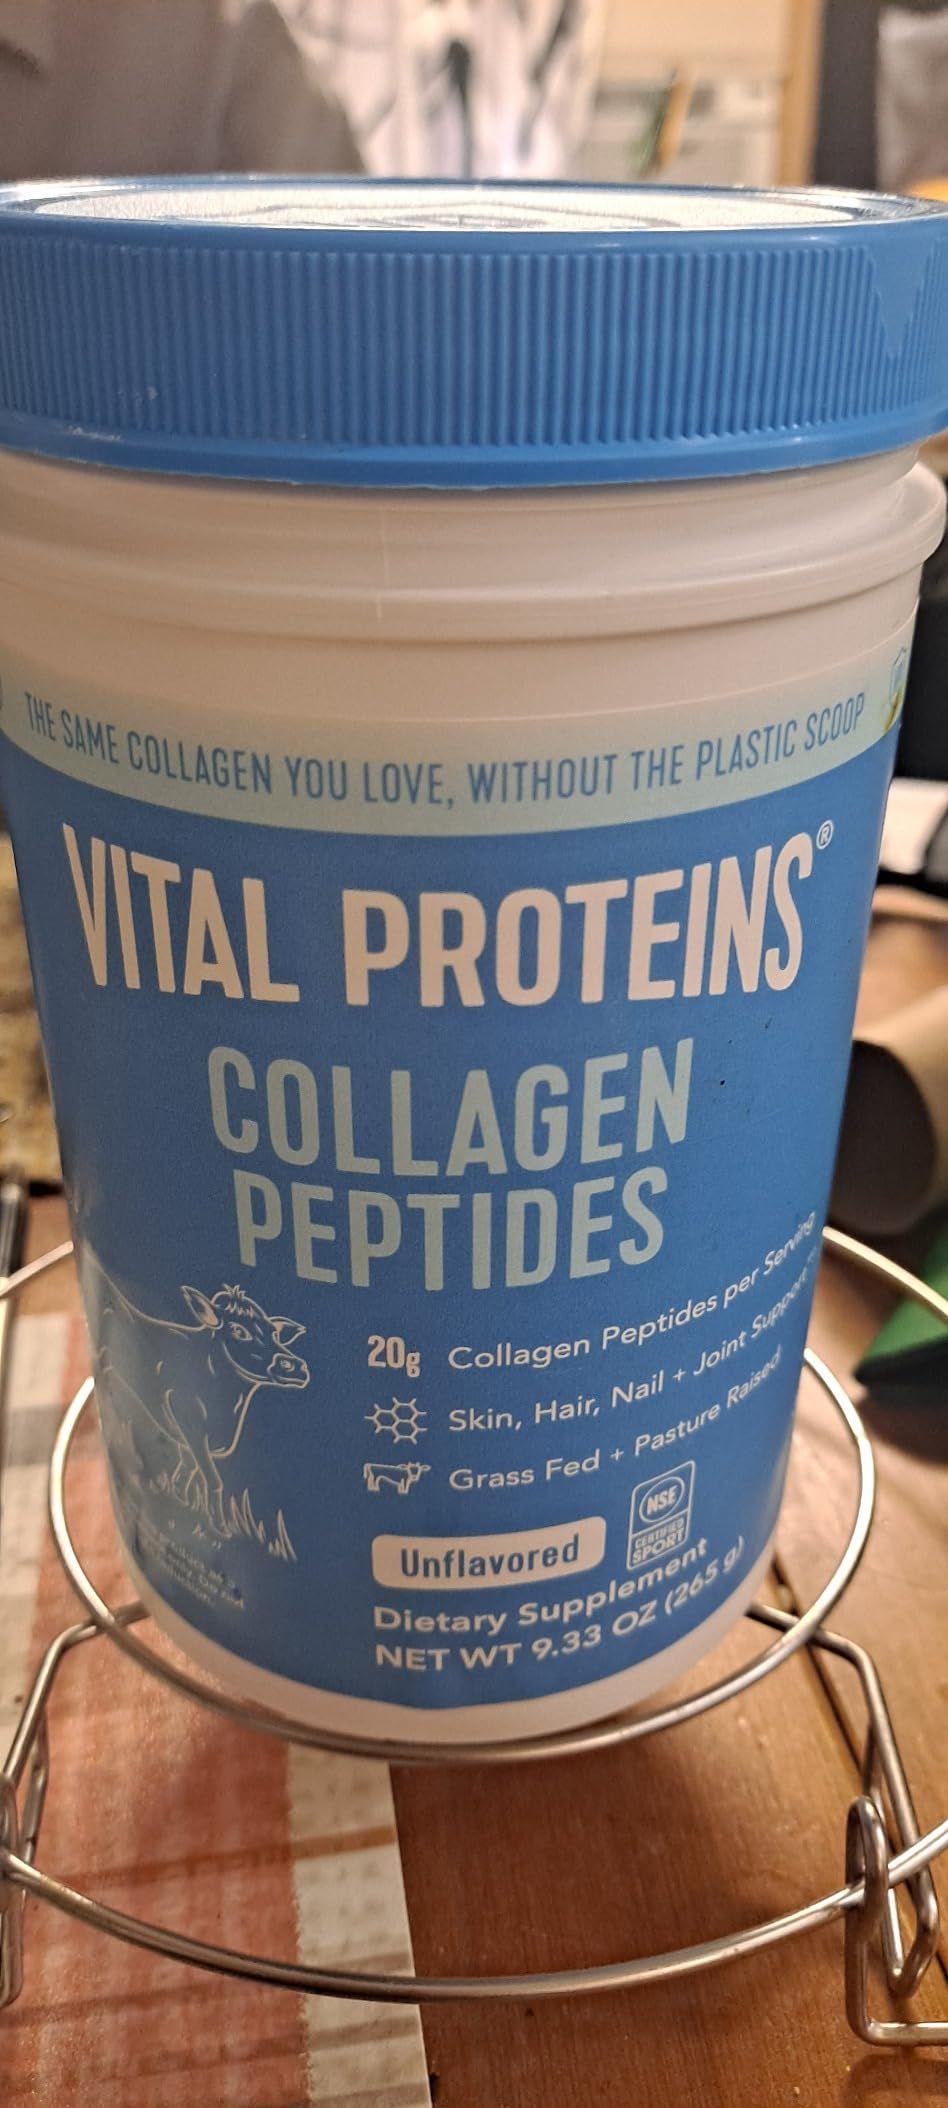 Vital Proteins Collagen Peptides Powder, Promotes Hair, Nail, Skin, Bone and Joint Health, Zero S... | Amazon (US)